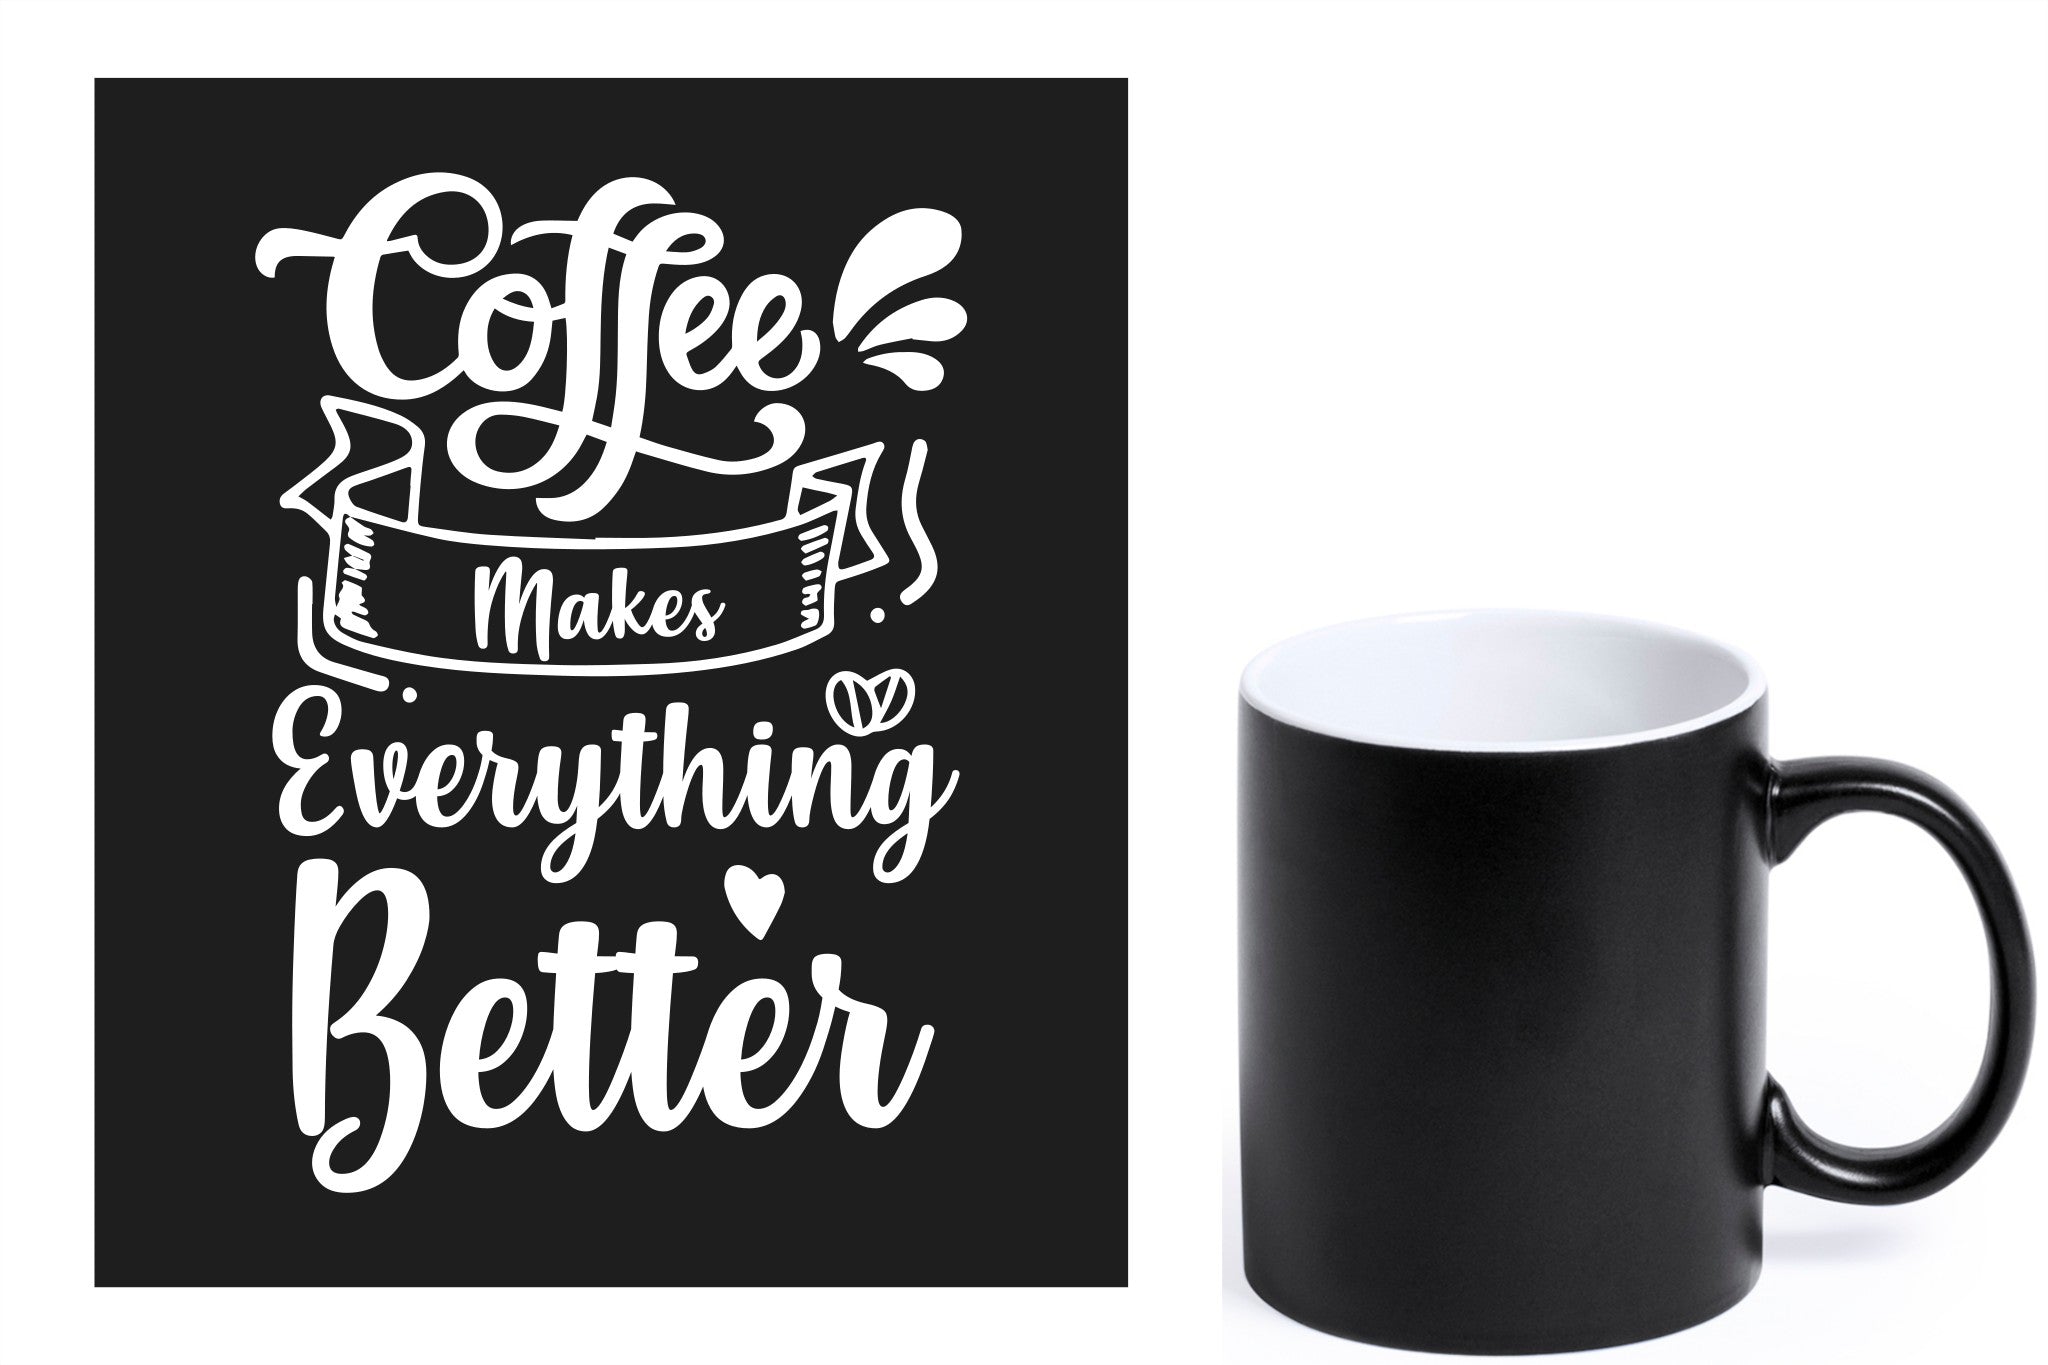 zwarte keramische mok met witte gravure  'Coffee makes everything better'.